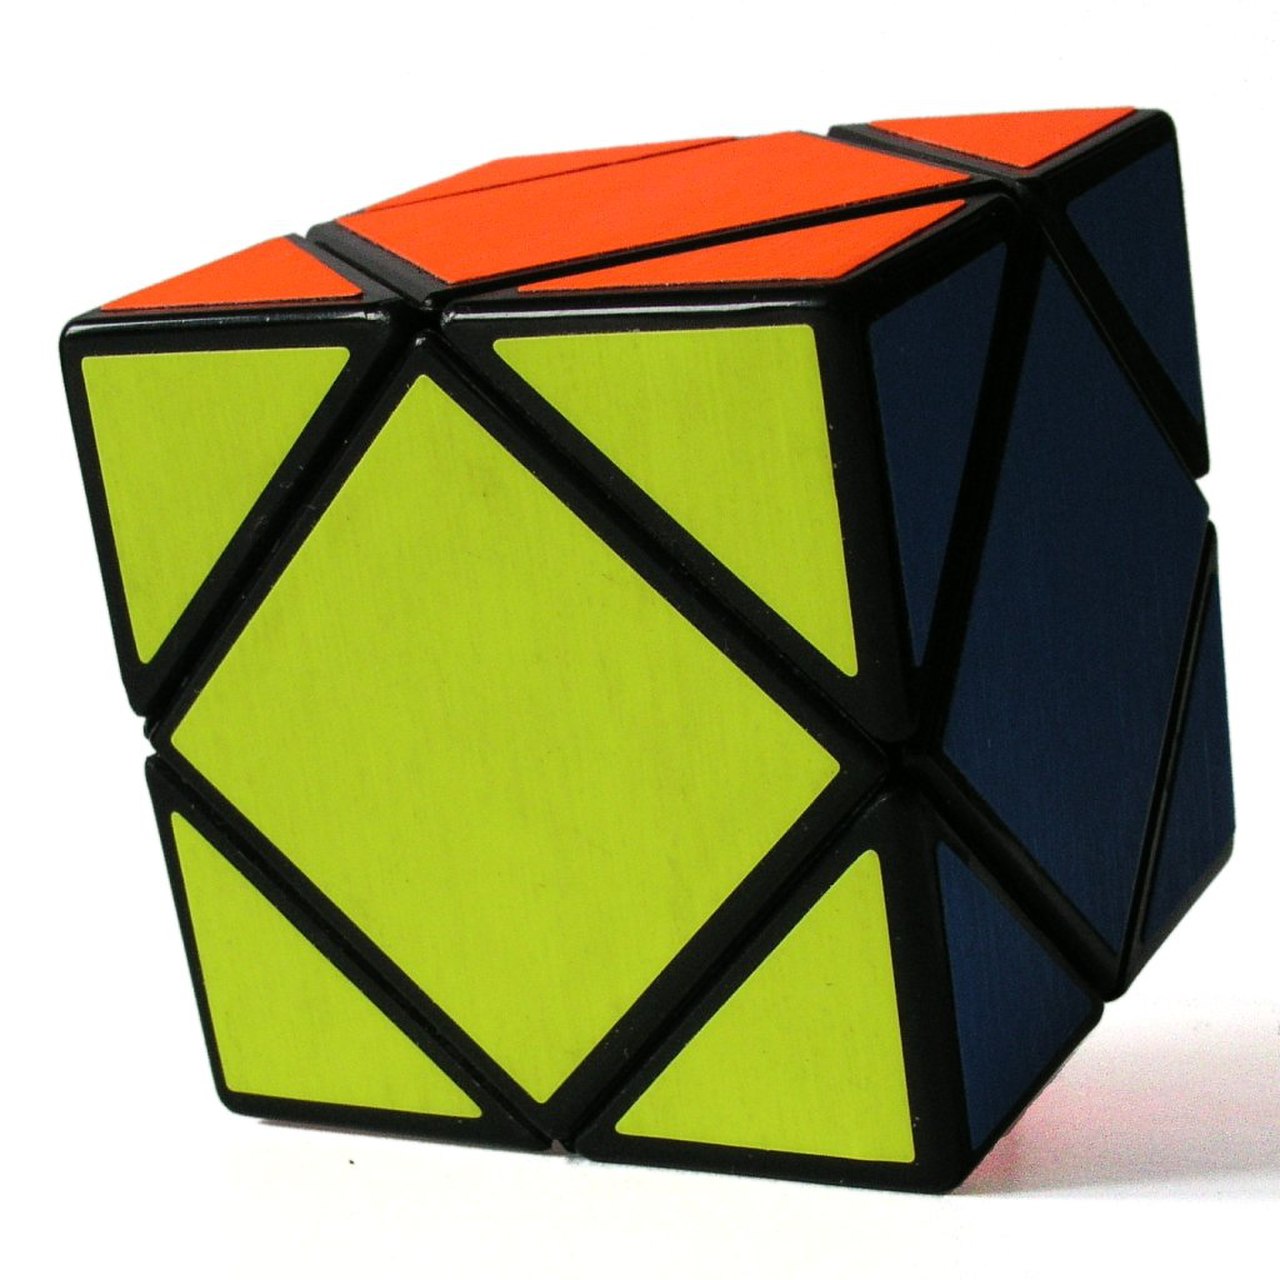 Другое название куба. Кубик Рубика Skewb. Головоломка Meffert`s скьюб. Головоломка скьюб 3х3. Фишер скьюб Паритет.